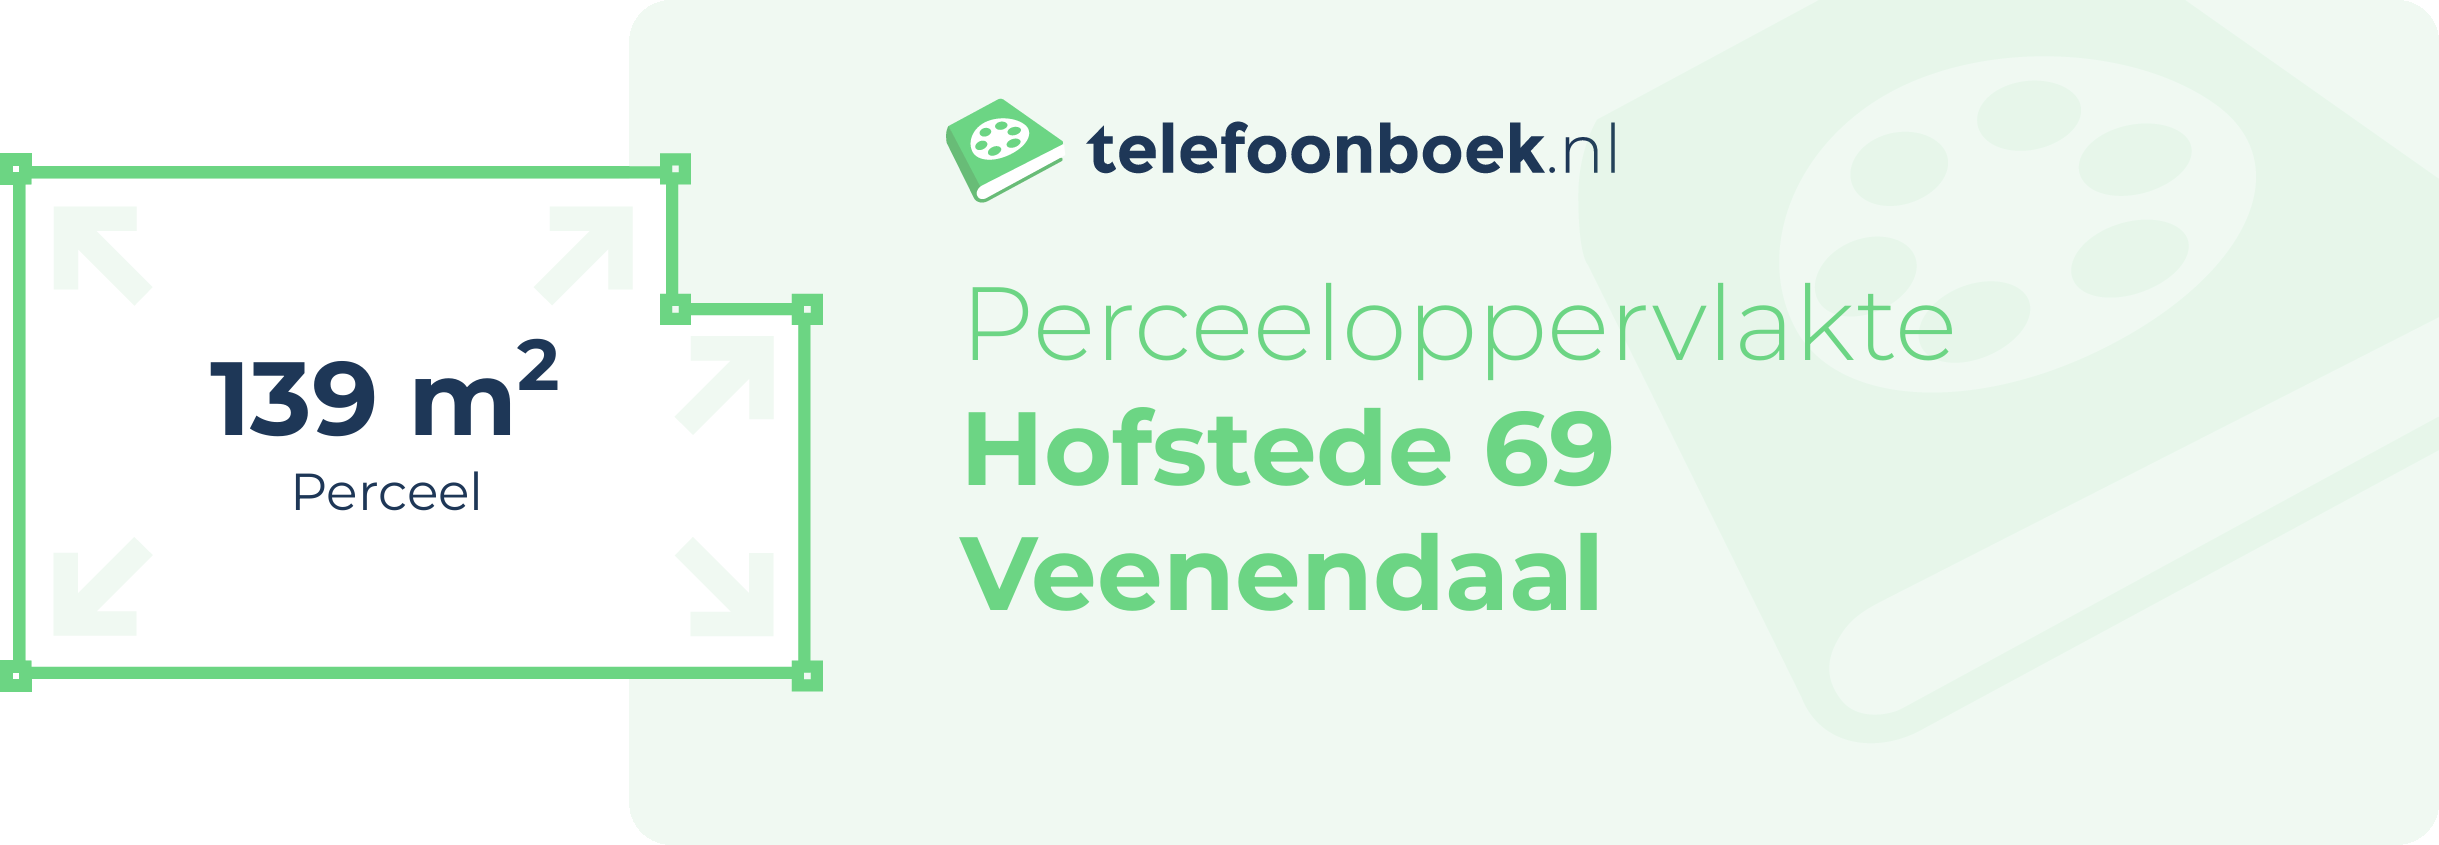 Perceeloppervlakte Hofstede 69 Veenendaal